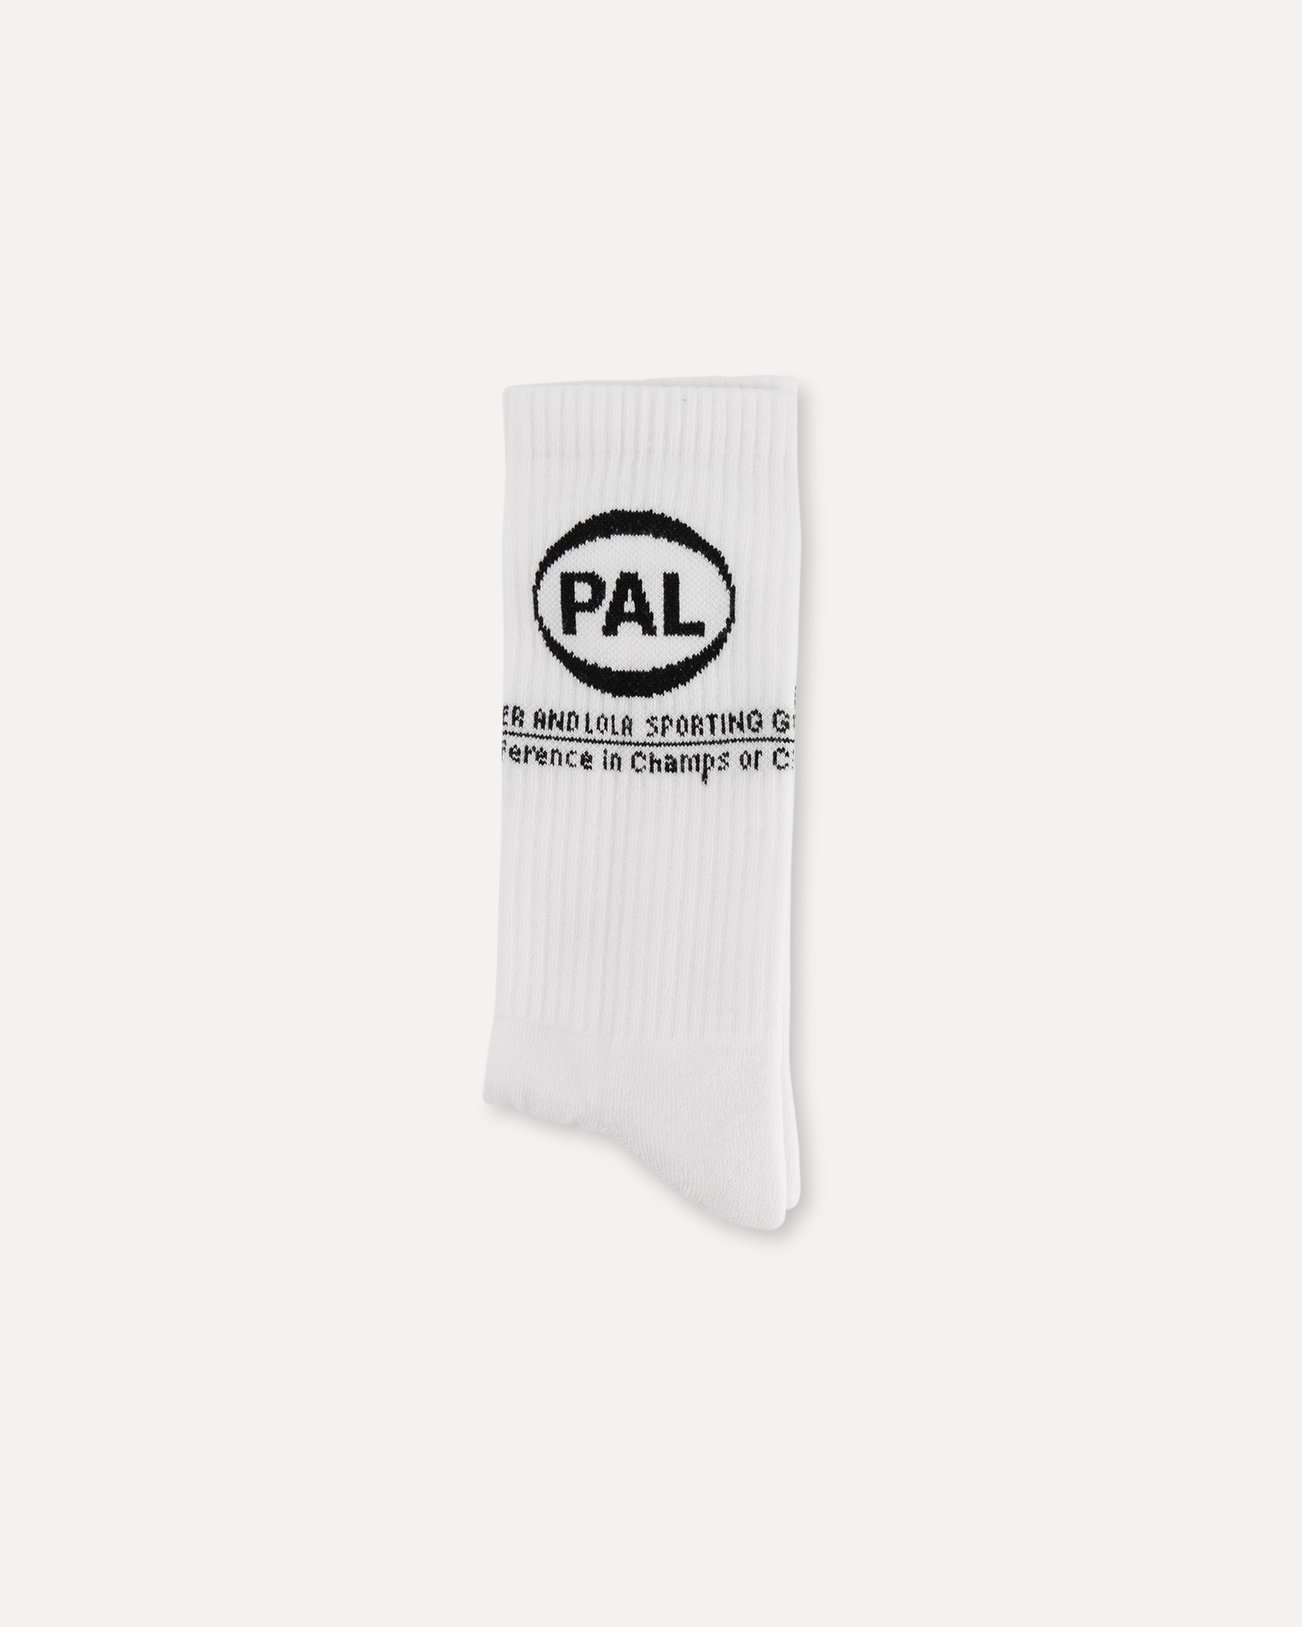 PAL Sporting Goods New Tm Socks WIT 1